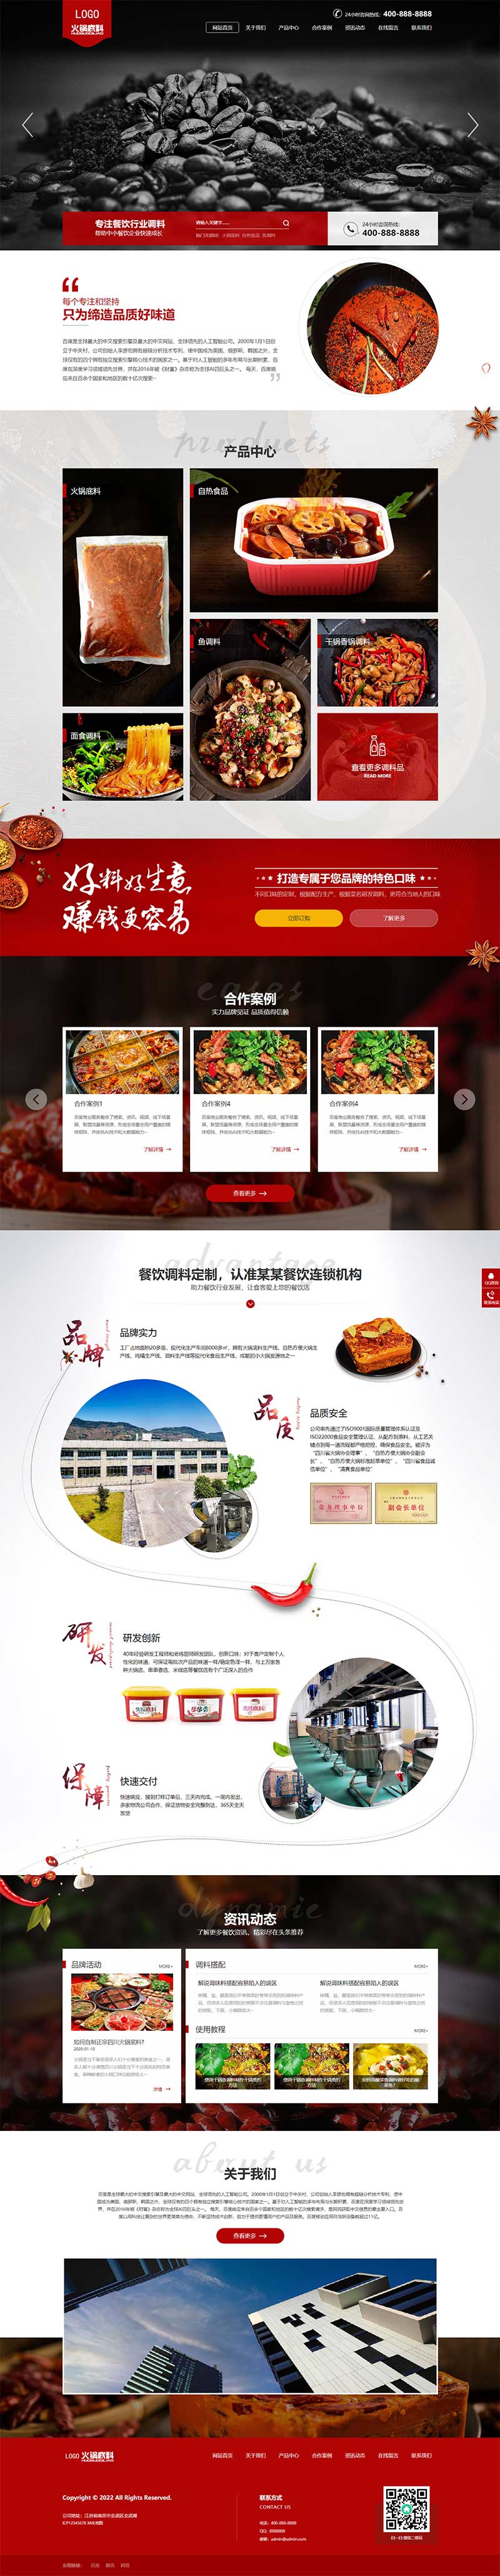 B0709-(PC+WAP)pbootcms高端火锅底料食品调料网站模板 营销型餐饮美食网站源码